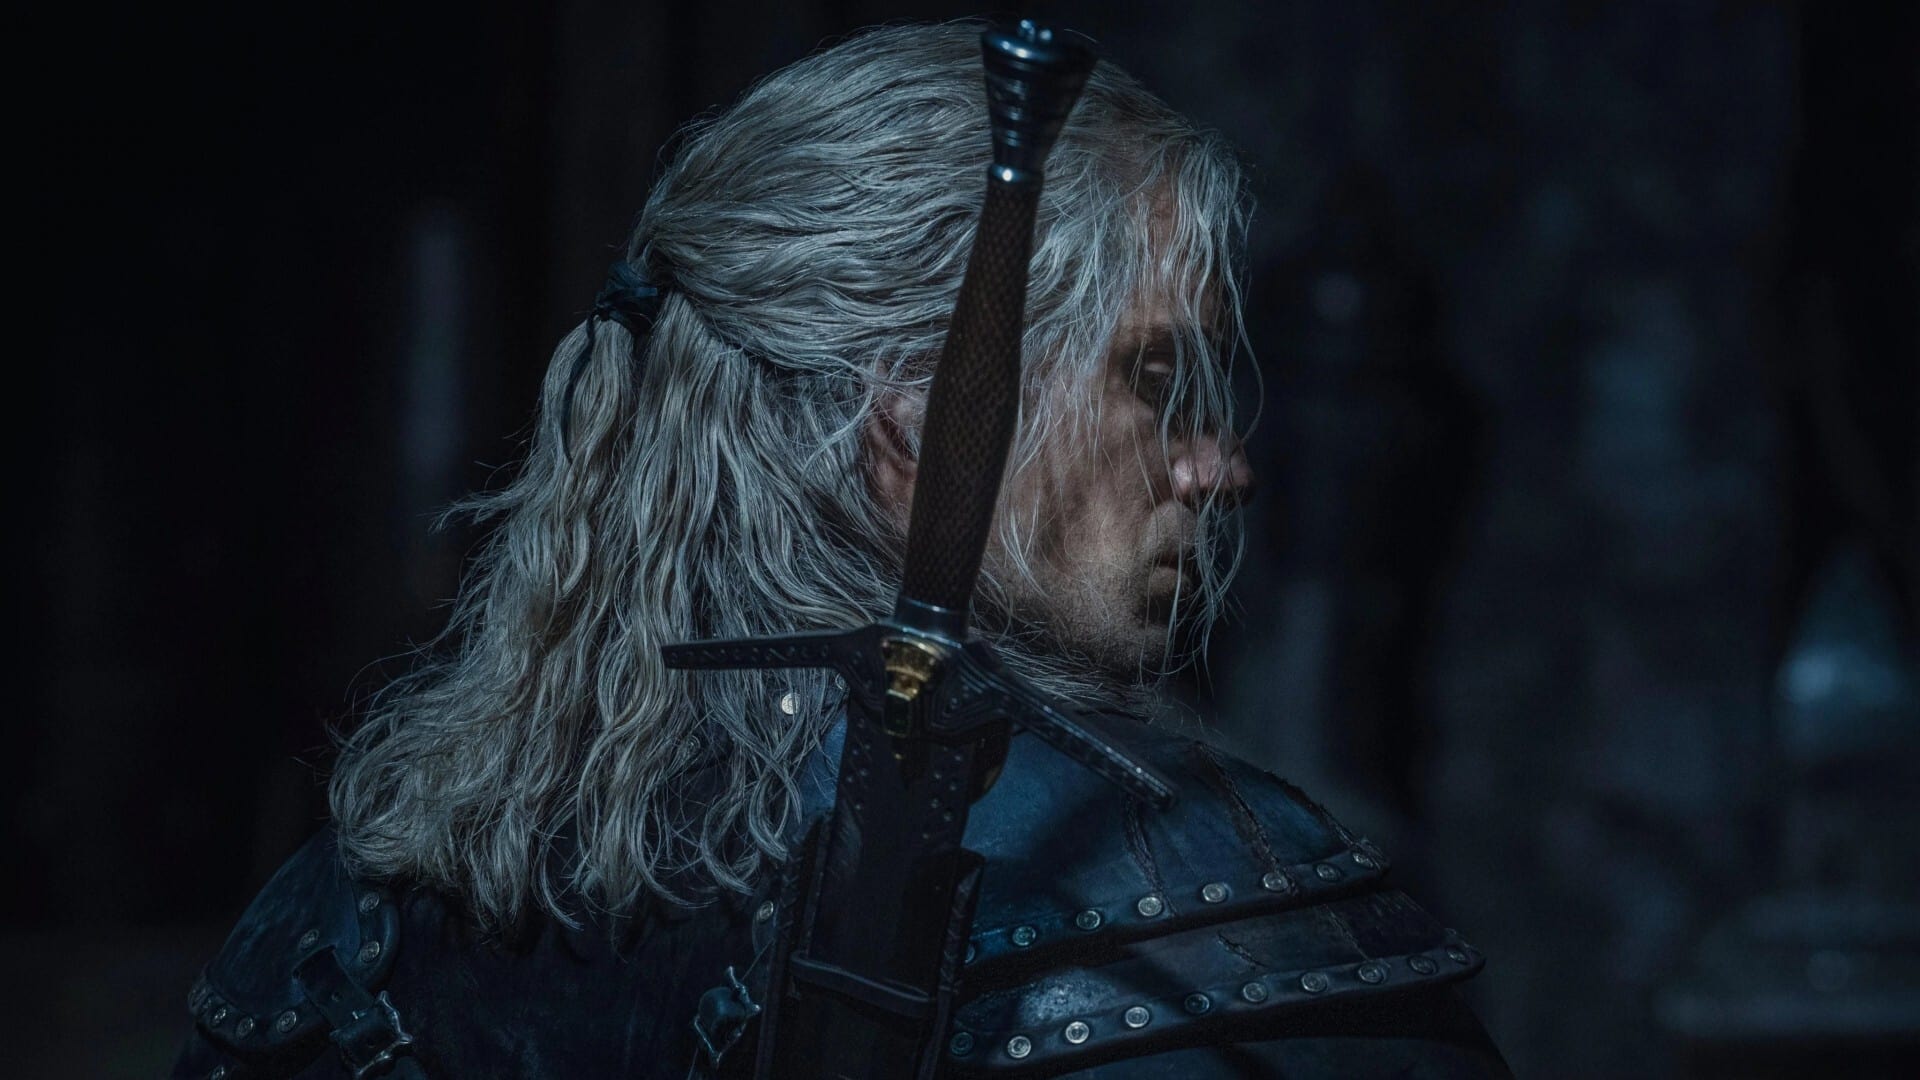 People 1920x1080 The Witcher (TV Series) Geralt of Rivia Henry Cavill actor closeup sword